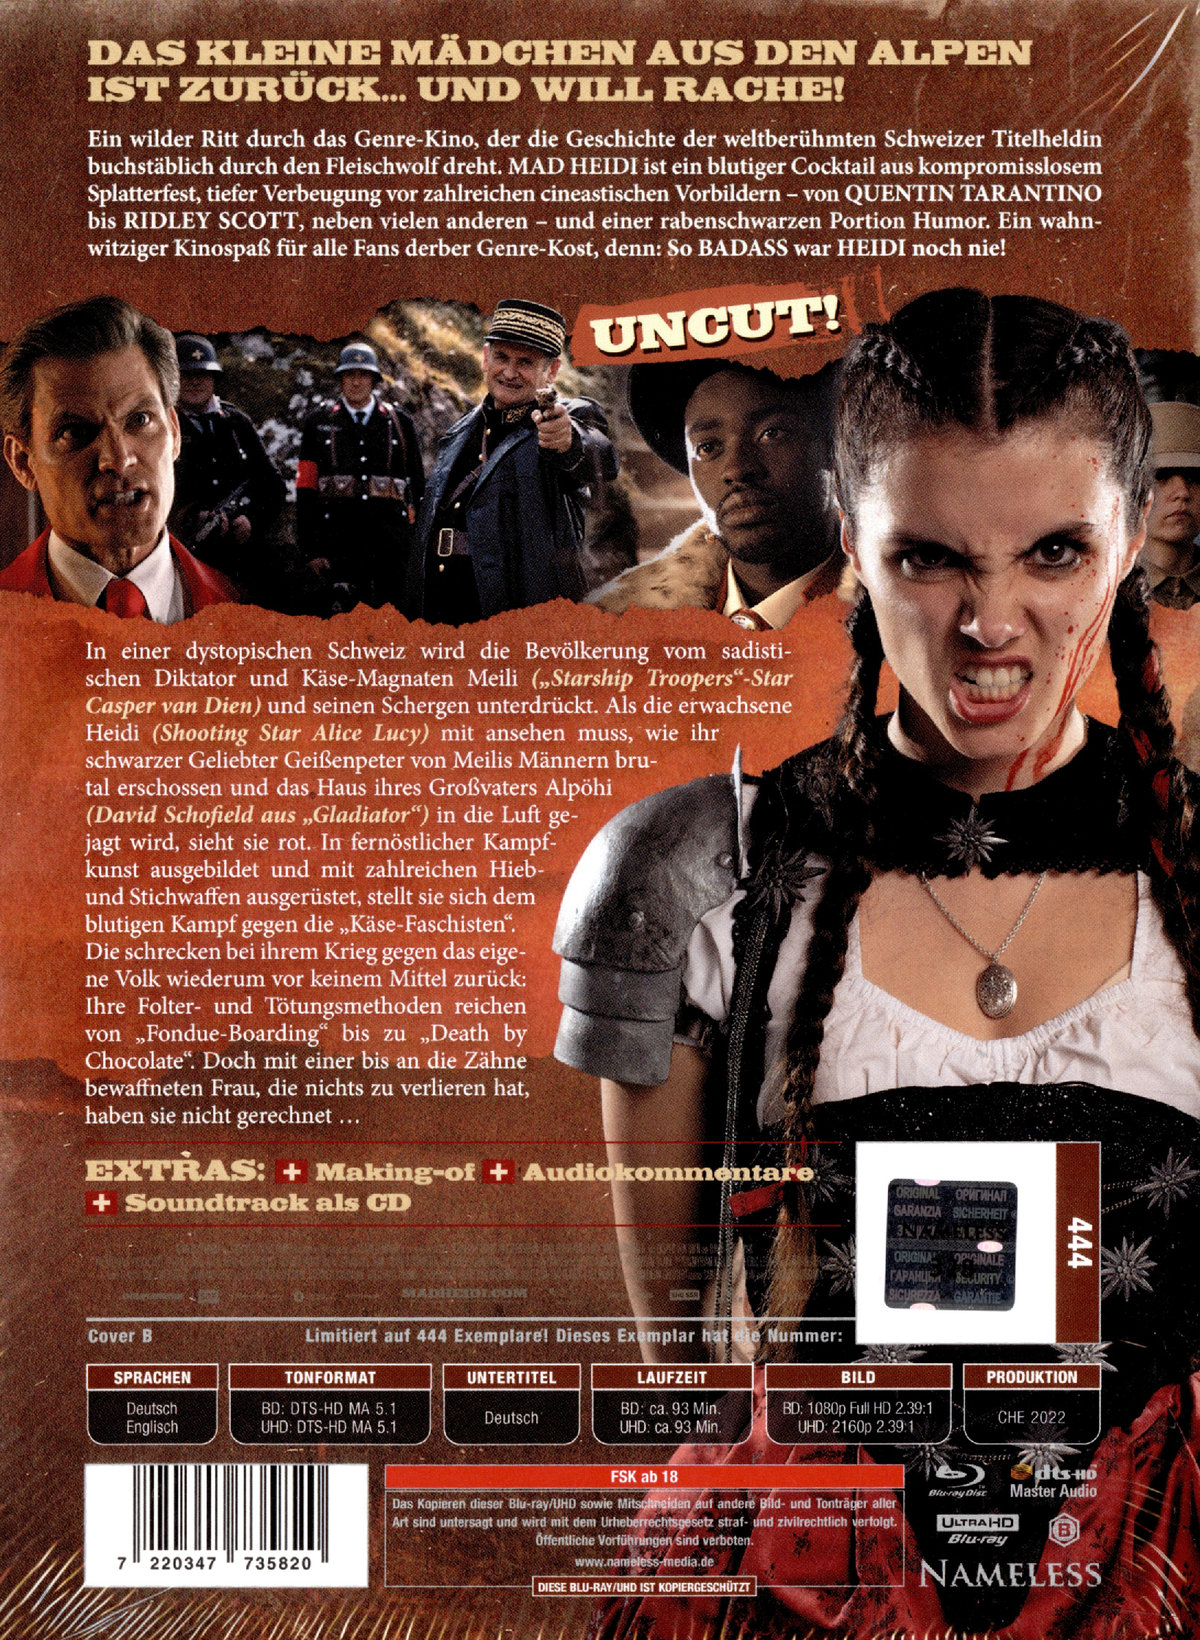 Mad Heidi - Uncut Mediabook Edition (4K Ultra HD+blu-ray) (B)